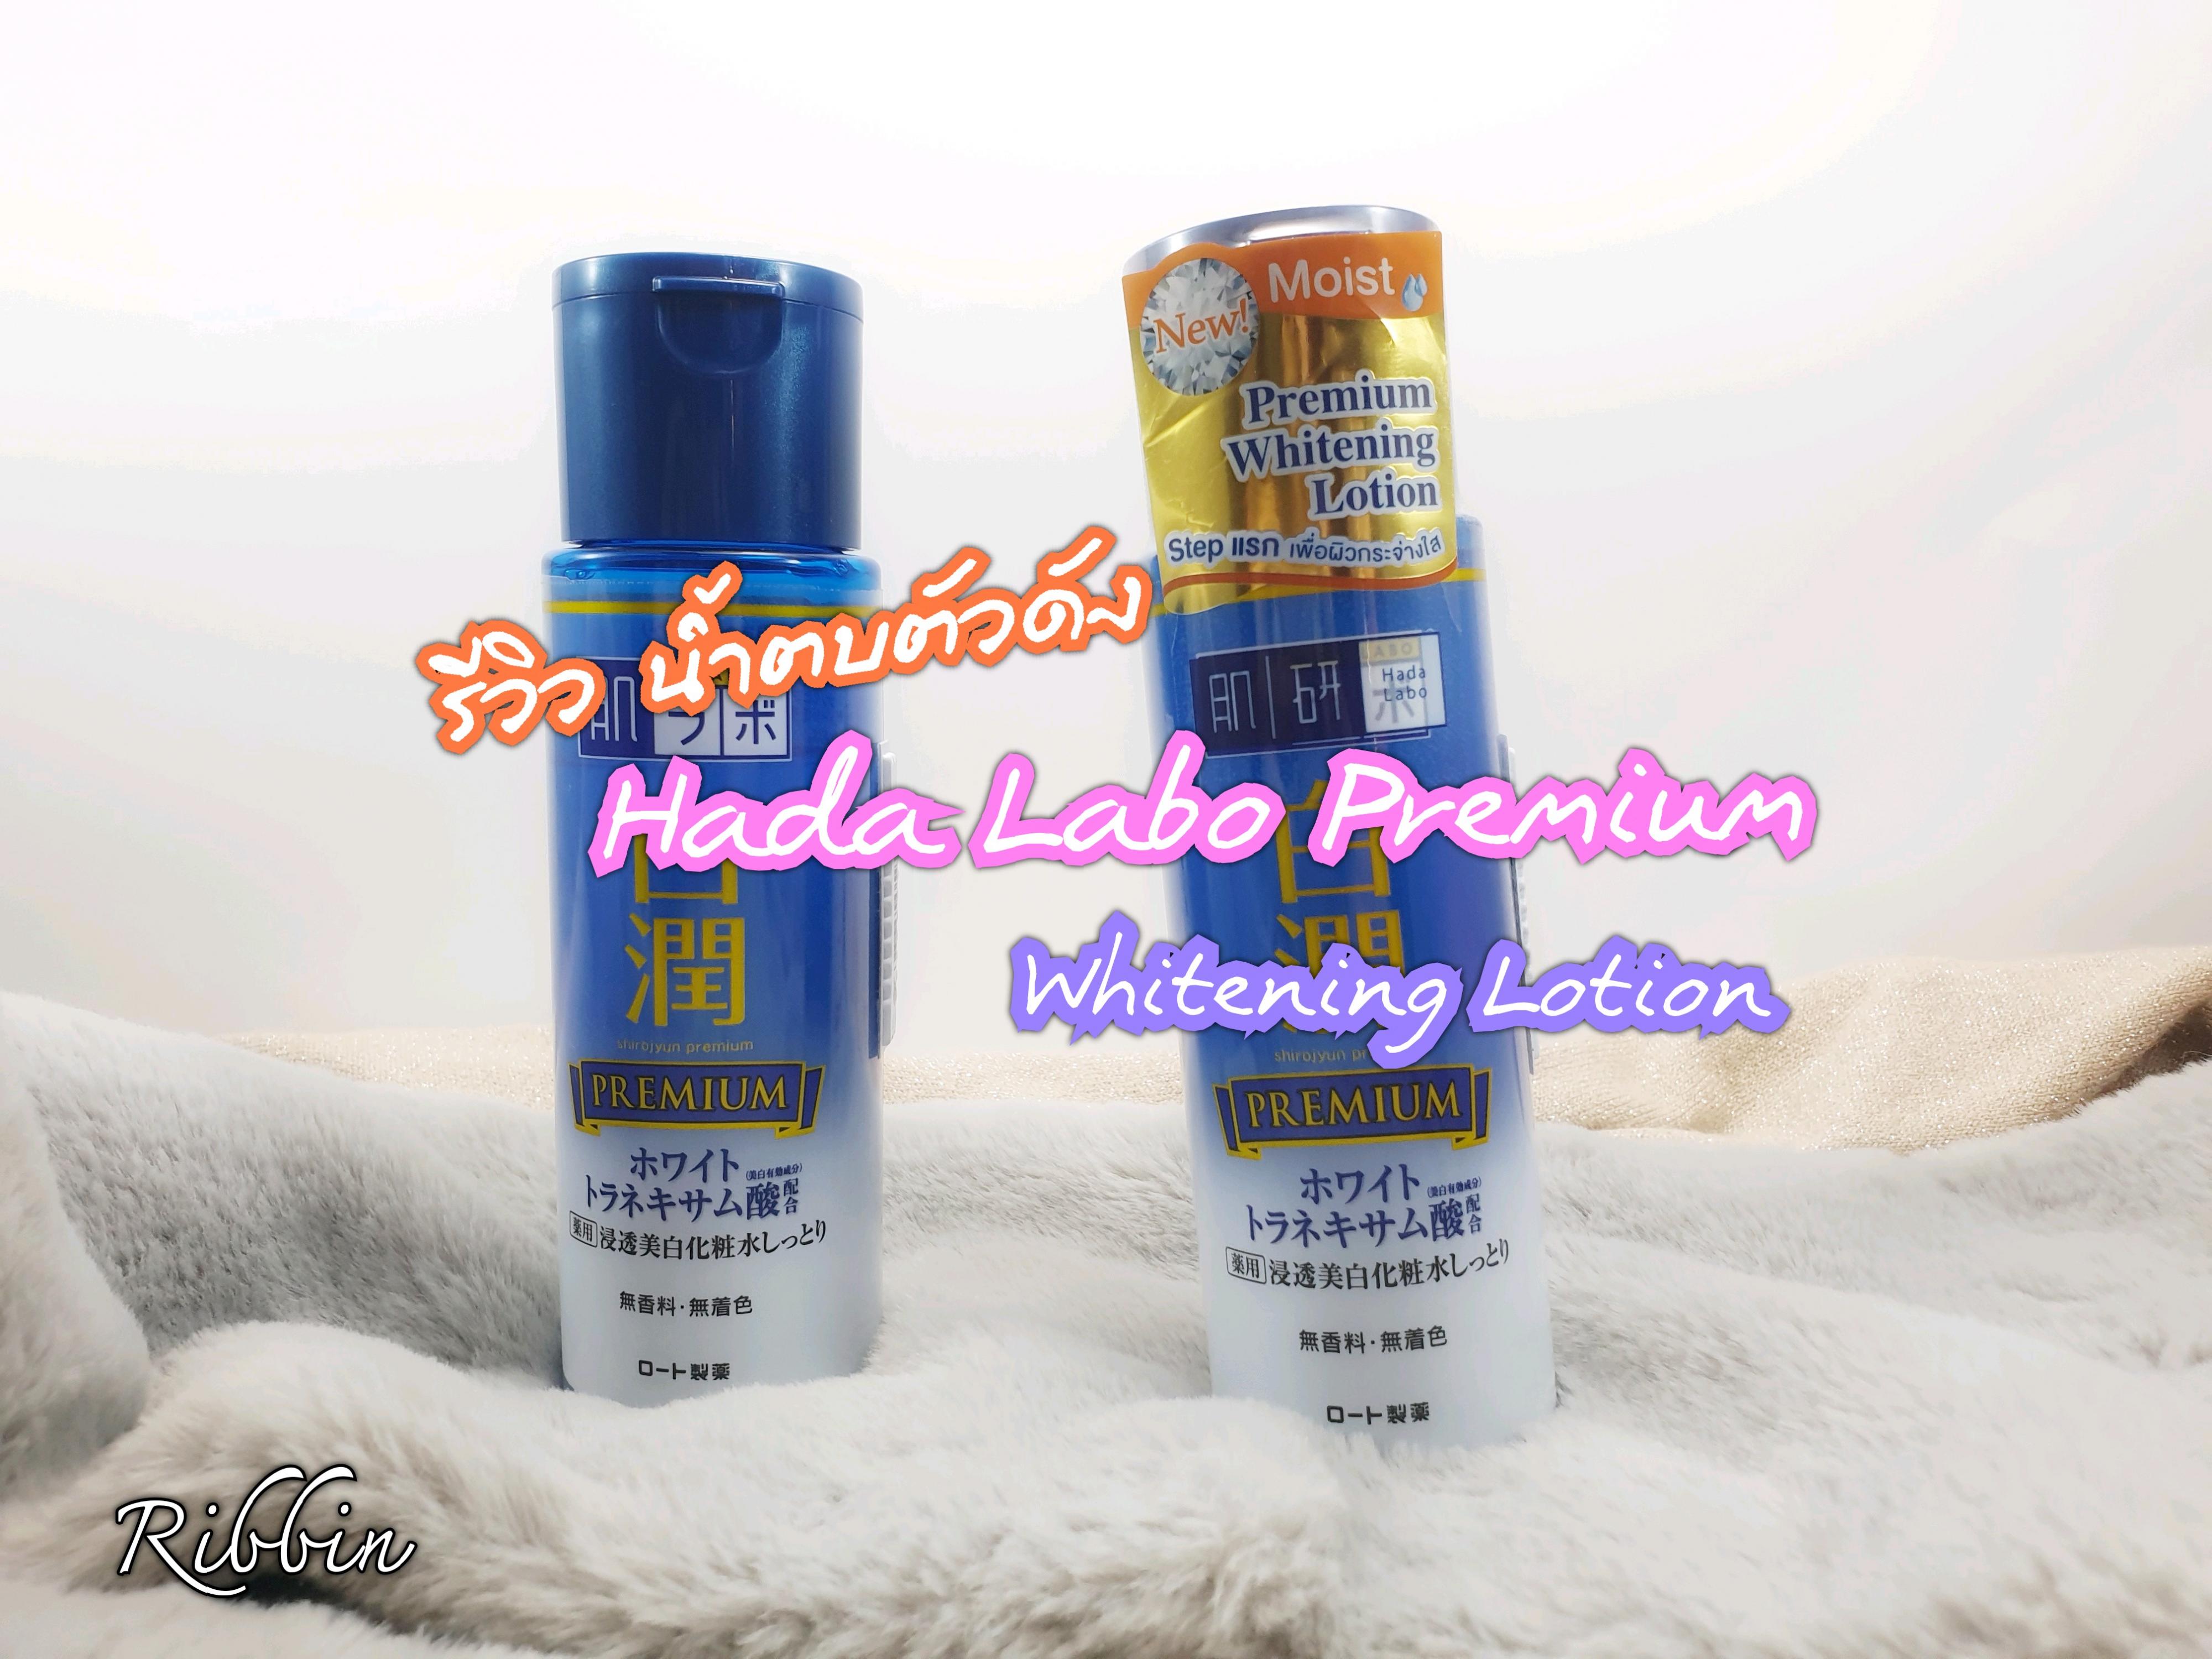 Hada labo premium whitening lotion